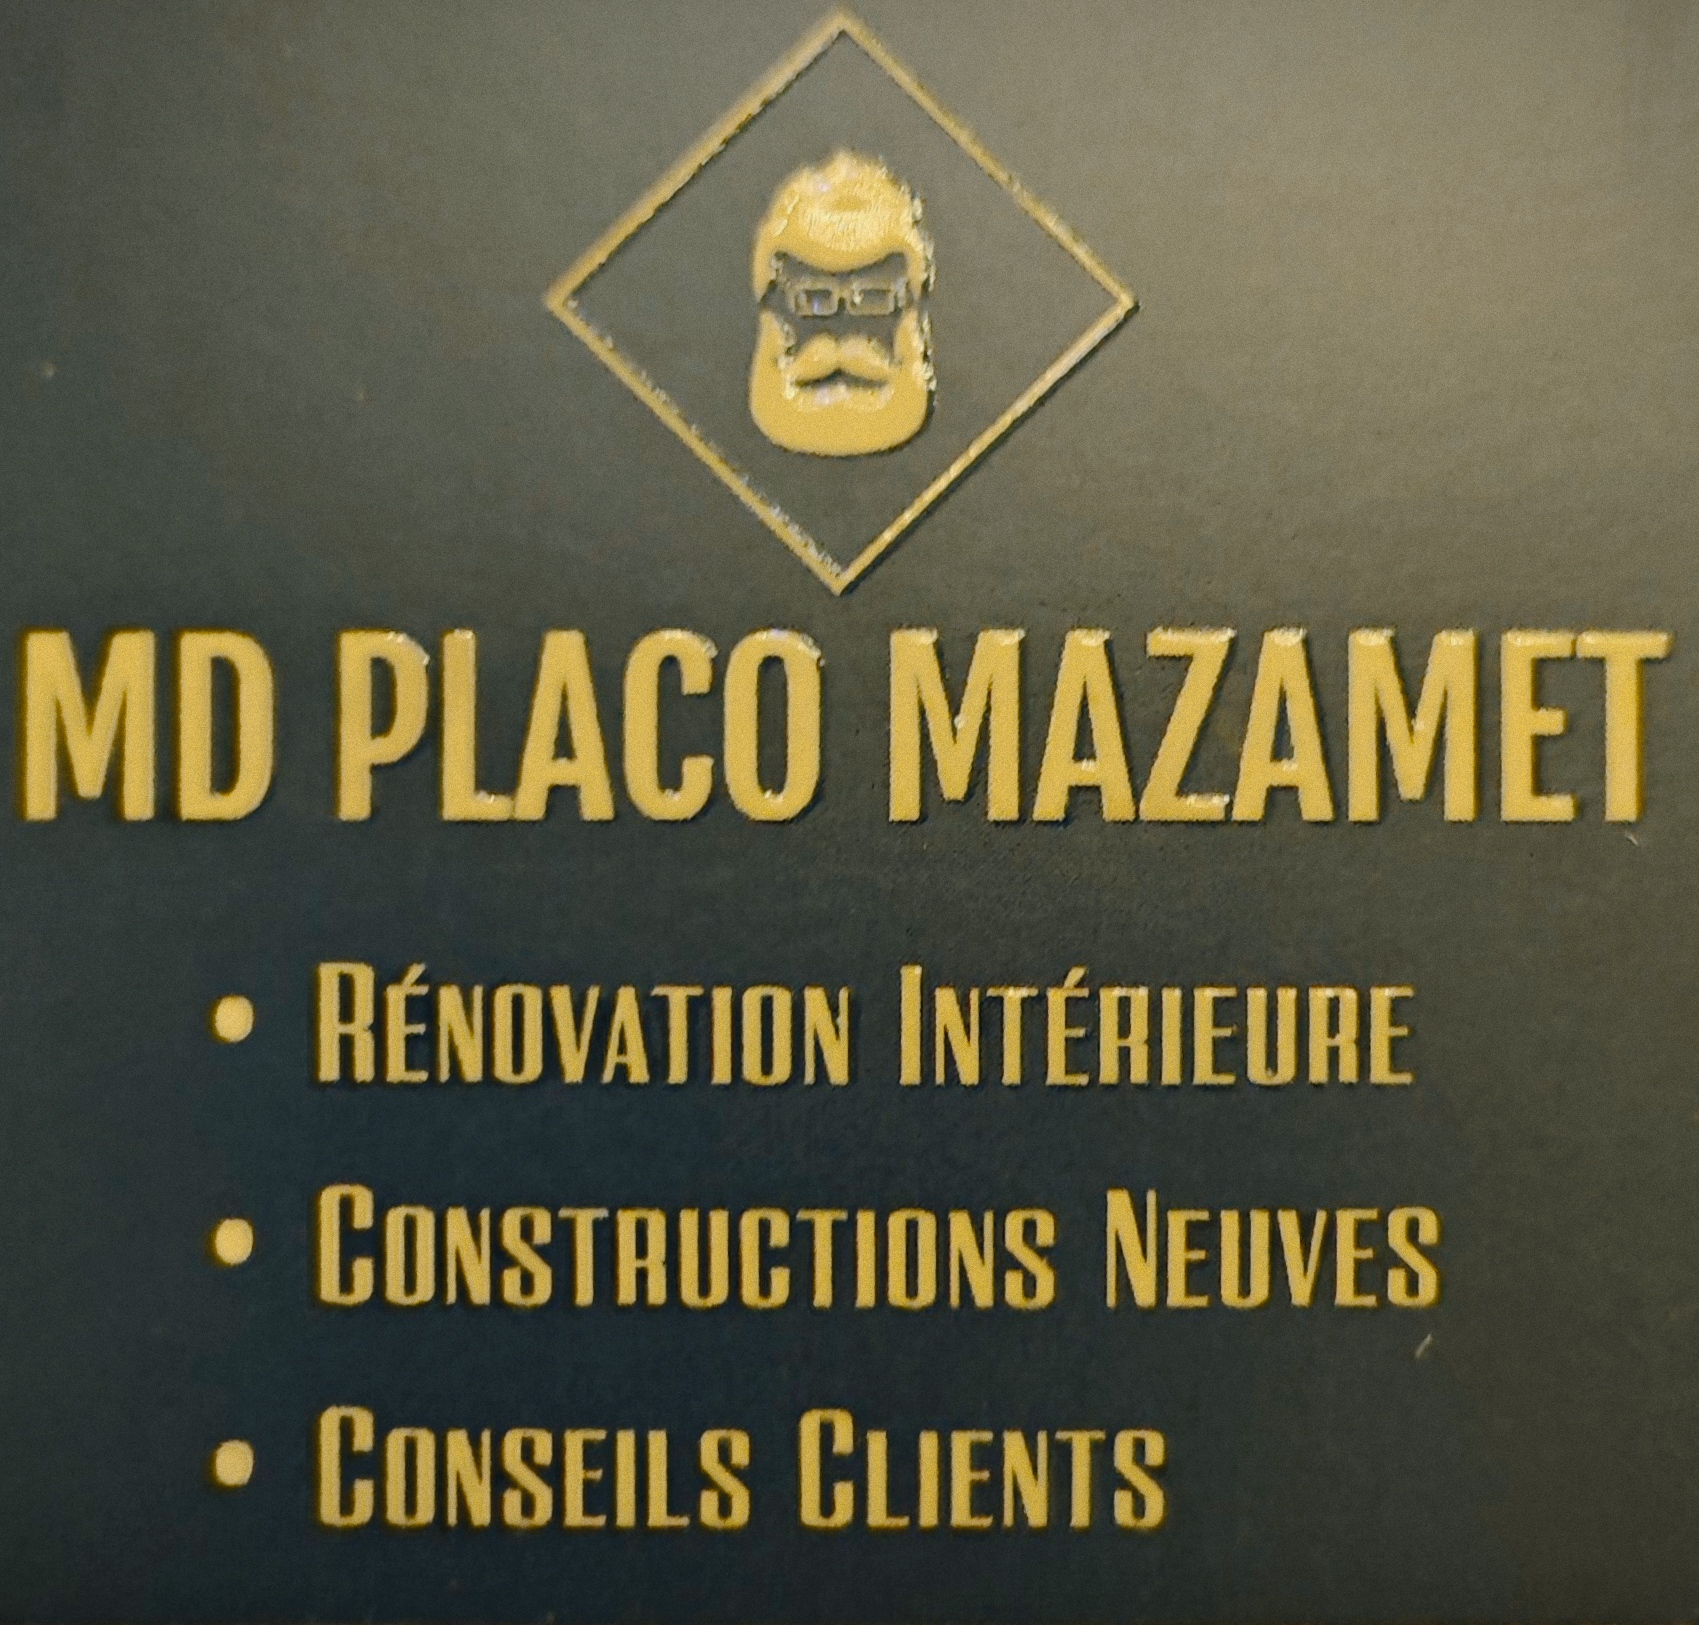 MD Placo Mazamet